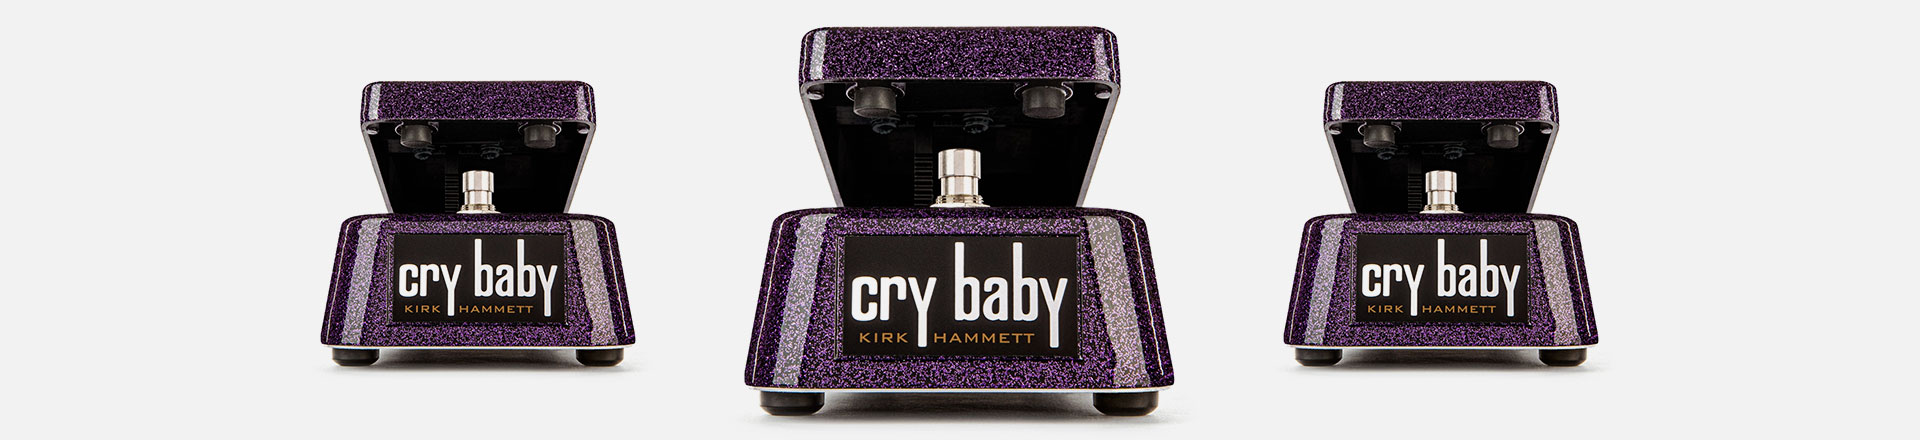 Cry Baby Wah Kirk Hammett KH95X - Nowa "kaczka" od Hammetta oraz Dunlopa